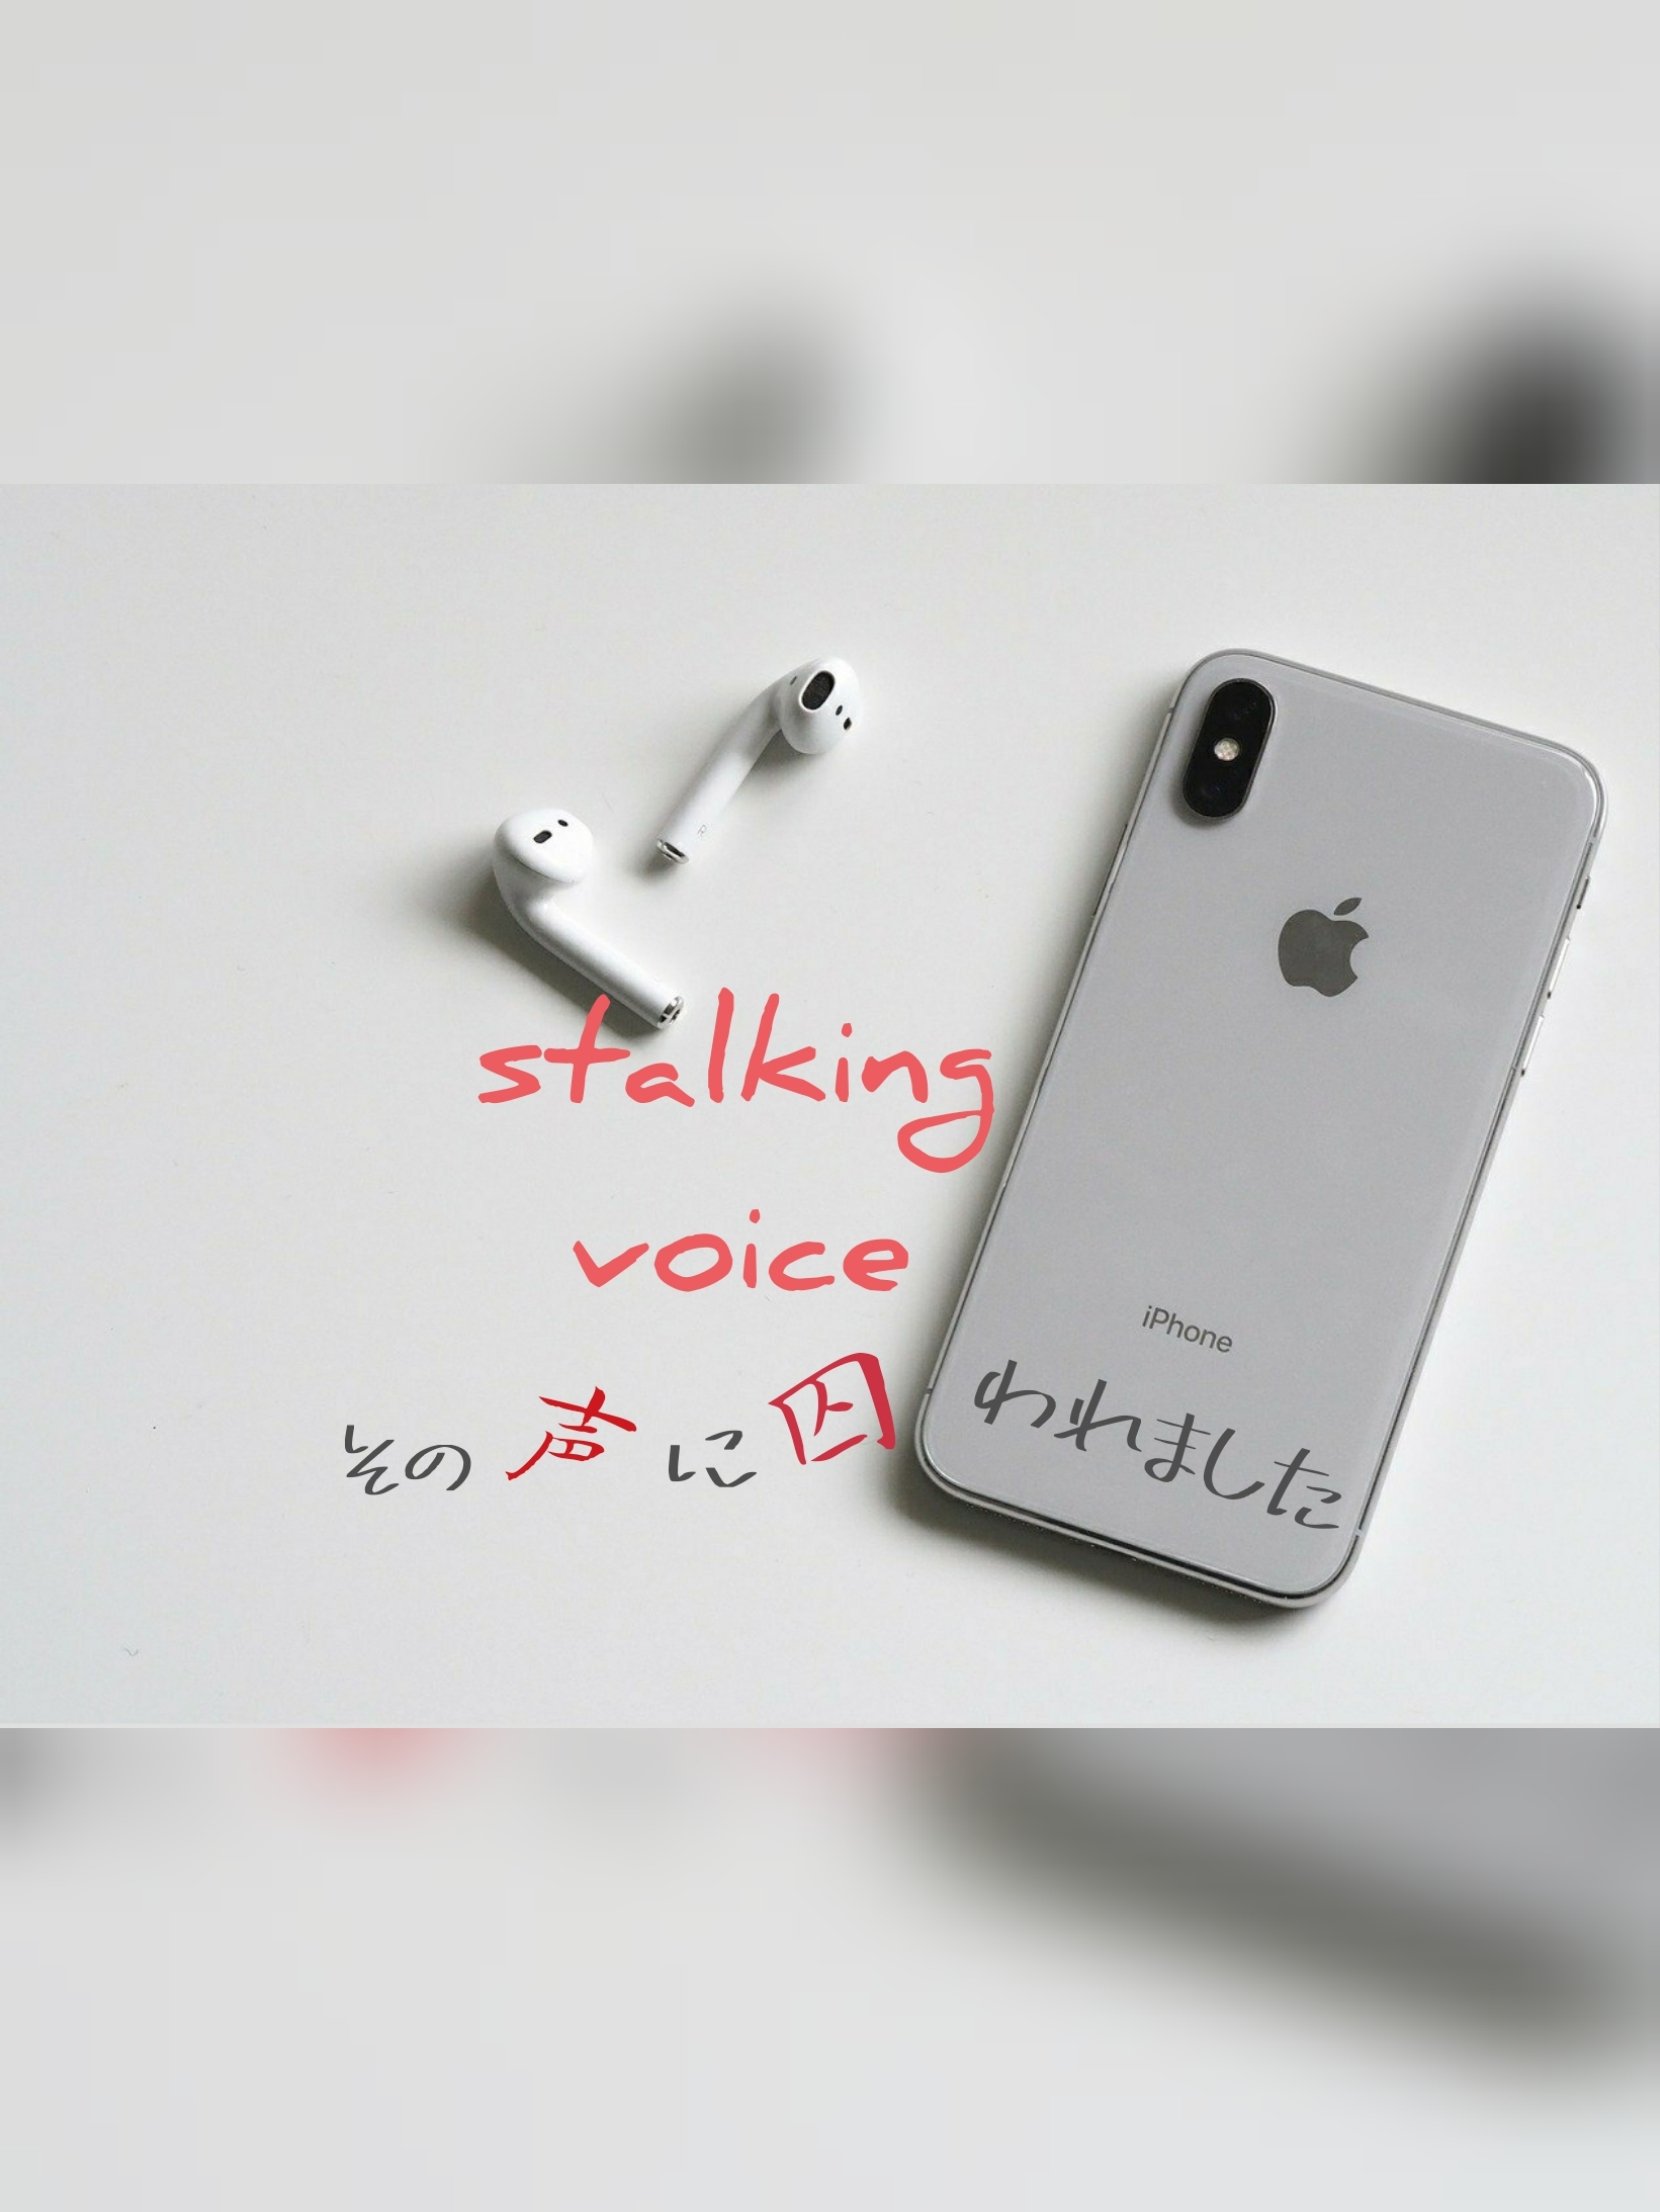 stalking voice